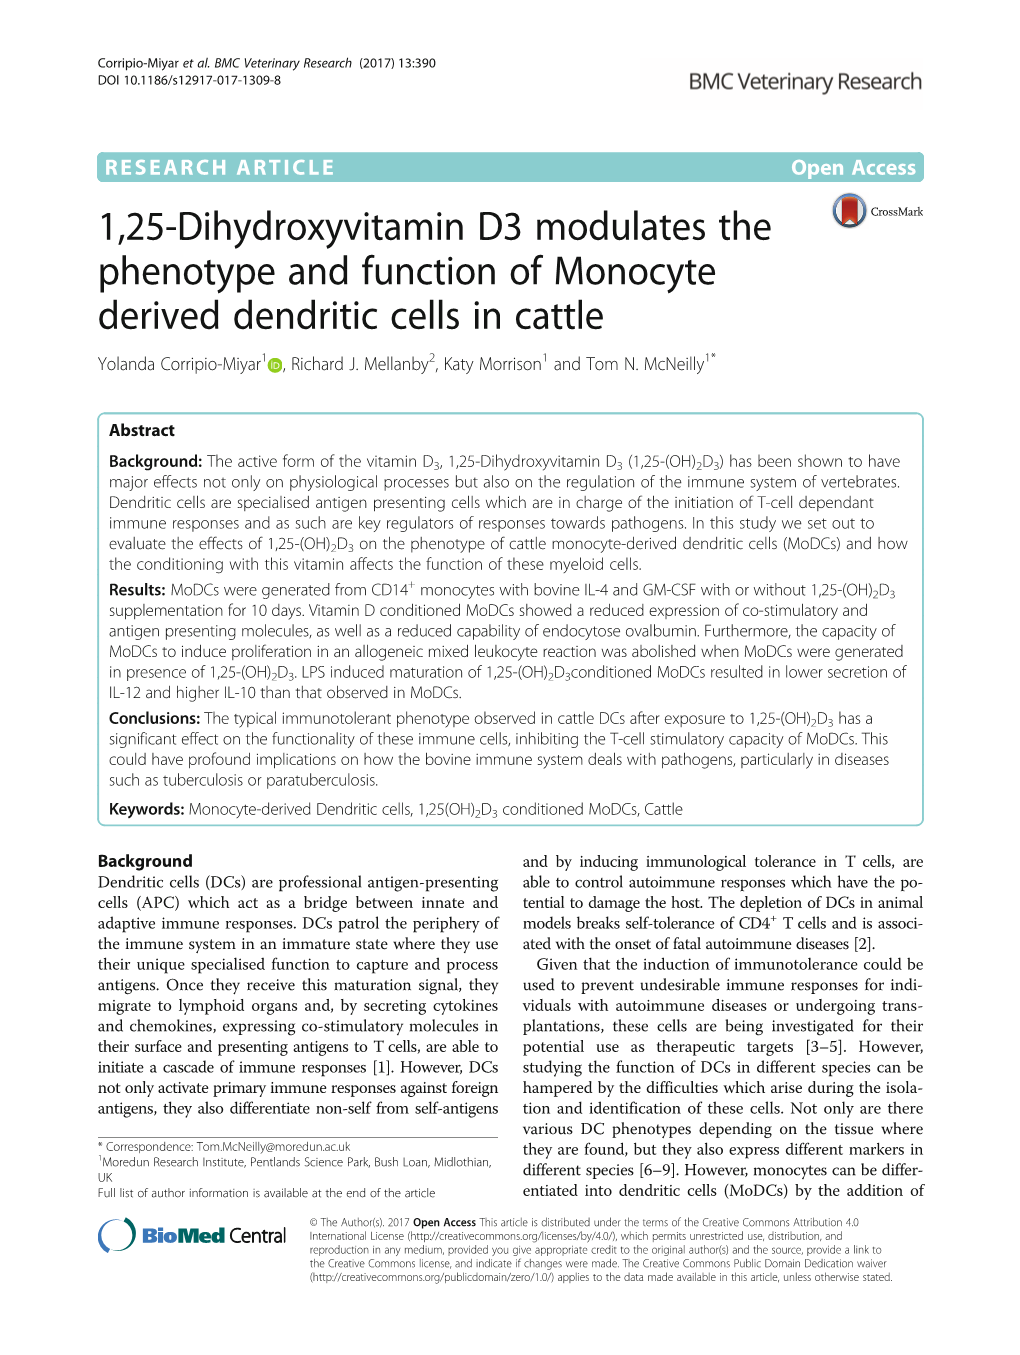 1,25-Dihydroxyvitamin D3 Modulates the Phenotype and Function of Monocyte Derived Dendritic Cells in Cattle Yolanda Corripio-Miyar1 , Richard J